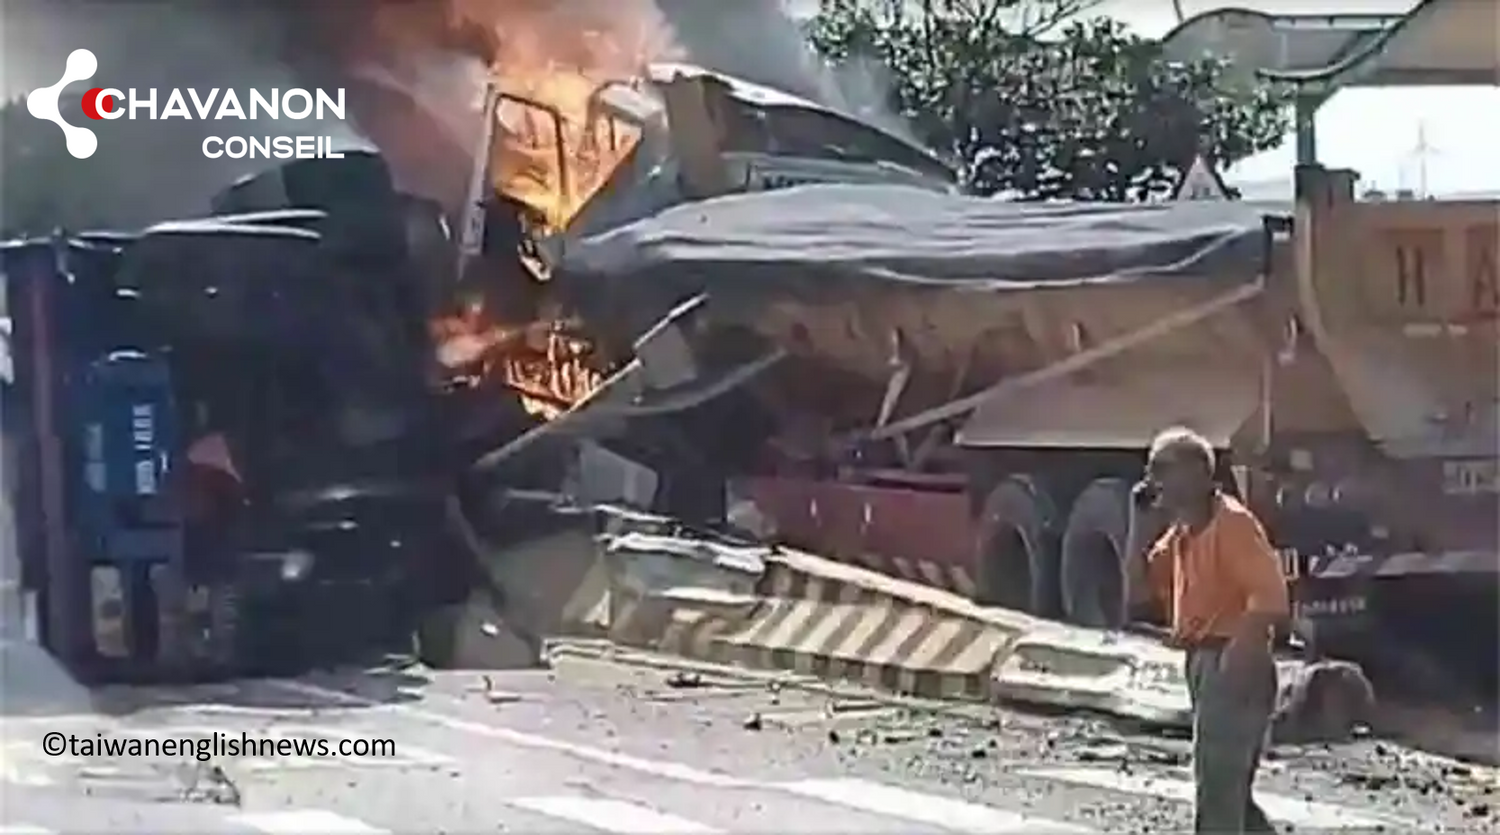 Accident à Taiwan : un chauffeur meurt après avoir percuté un container d'ammoniac - 19/11/2021